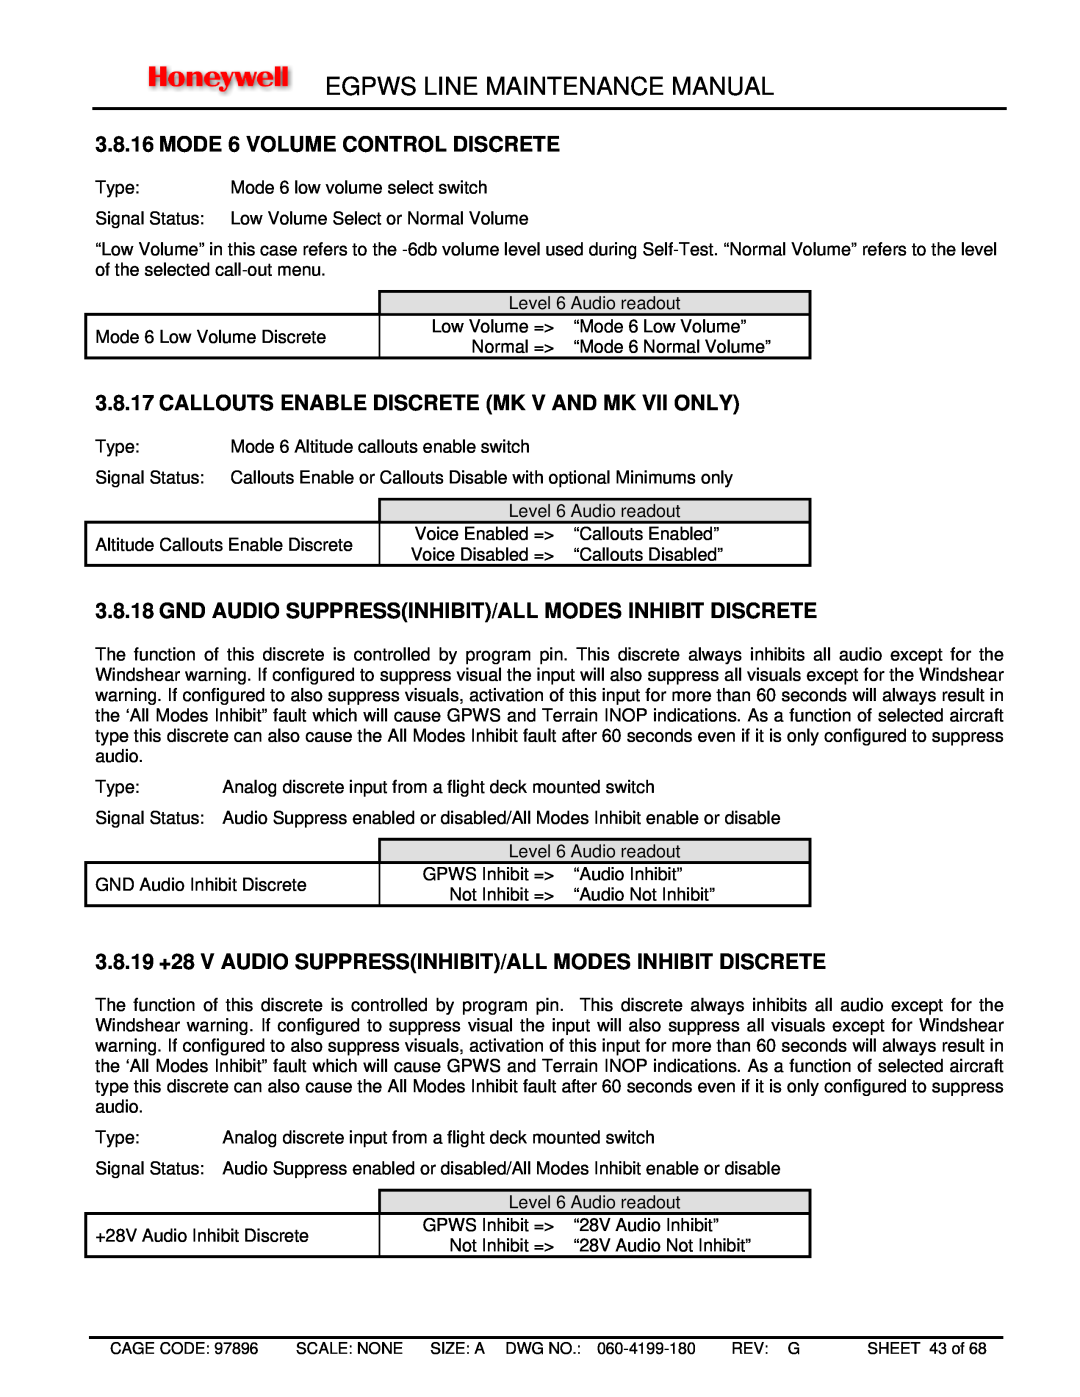 Honeywell MK VIII, MK XXII manual MODE 6 VOLUME CONTROL DISCRETE, Egpws Line Maintenance Manual 